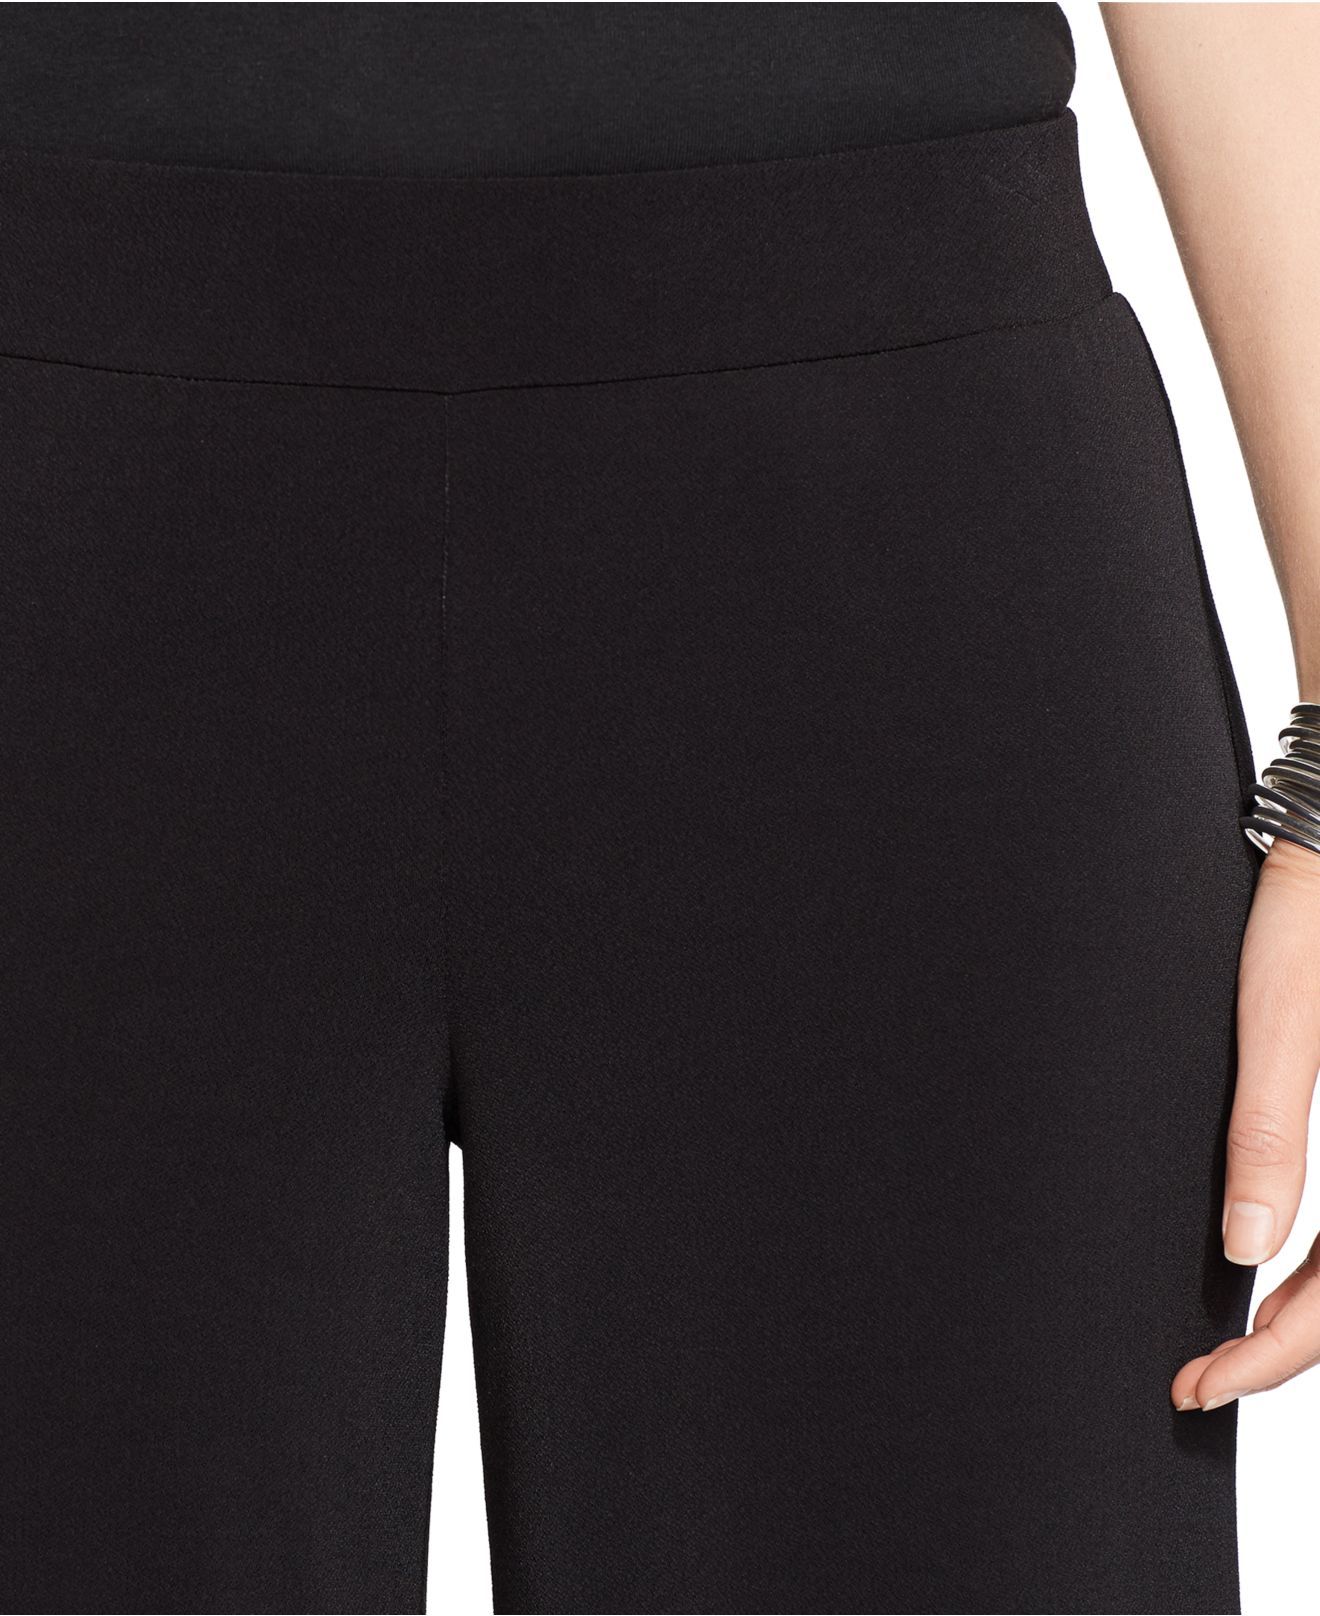 Lyst - Lauren by Ralph Lauren Plus Size Wide-Leg Pants in Black